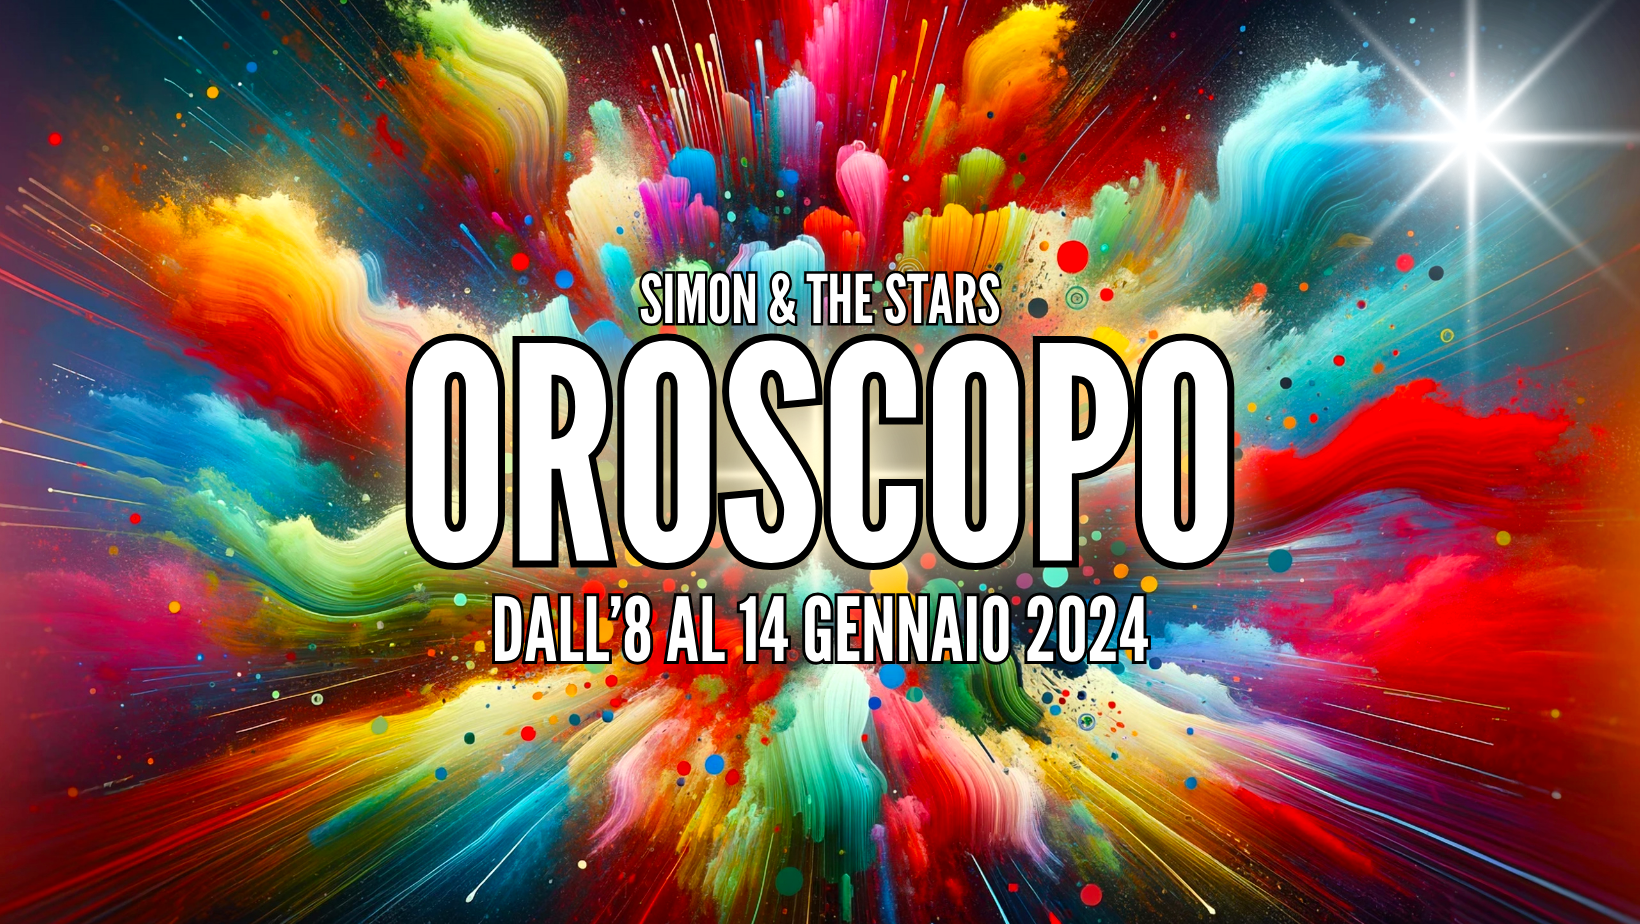 OROSCOPO DALL'8 AL 14 GENNAIO 2024